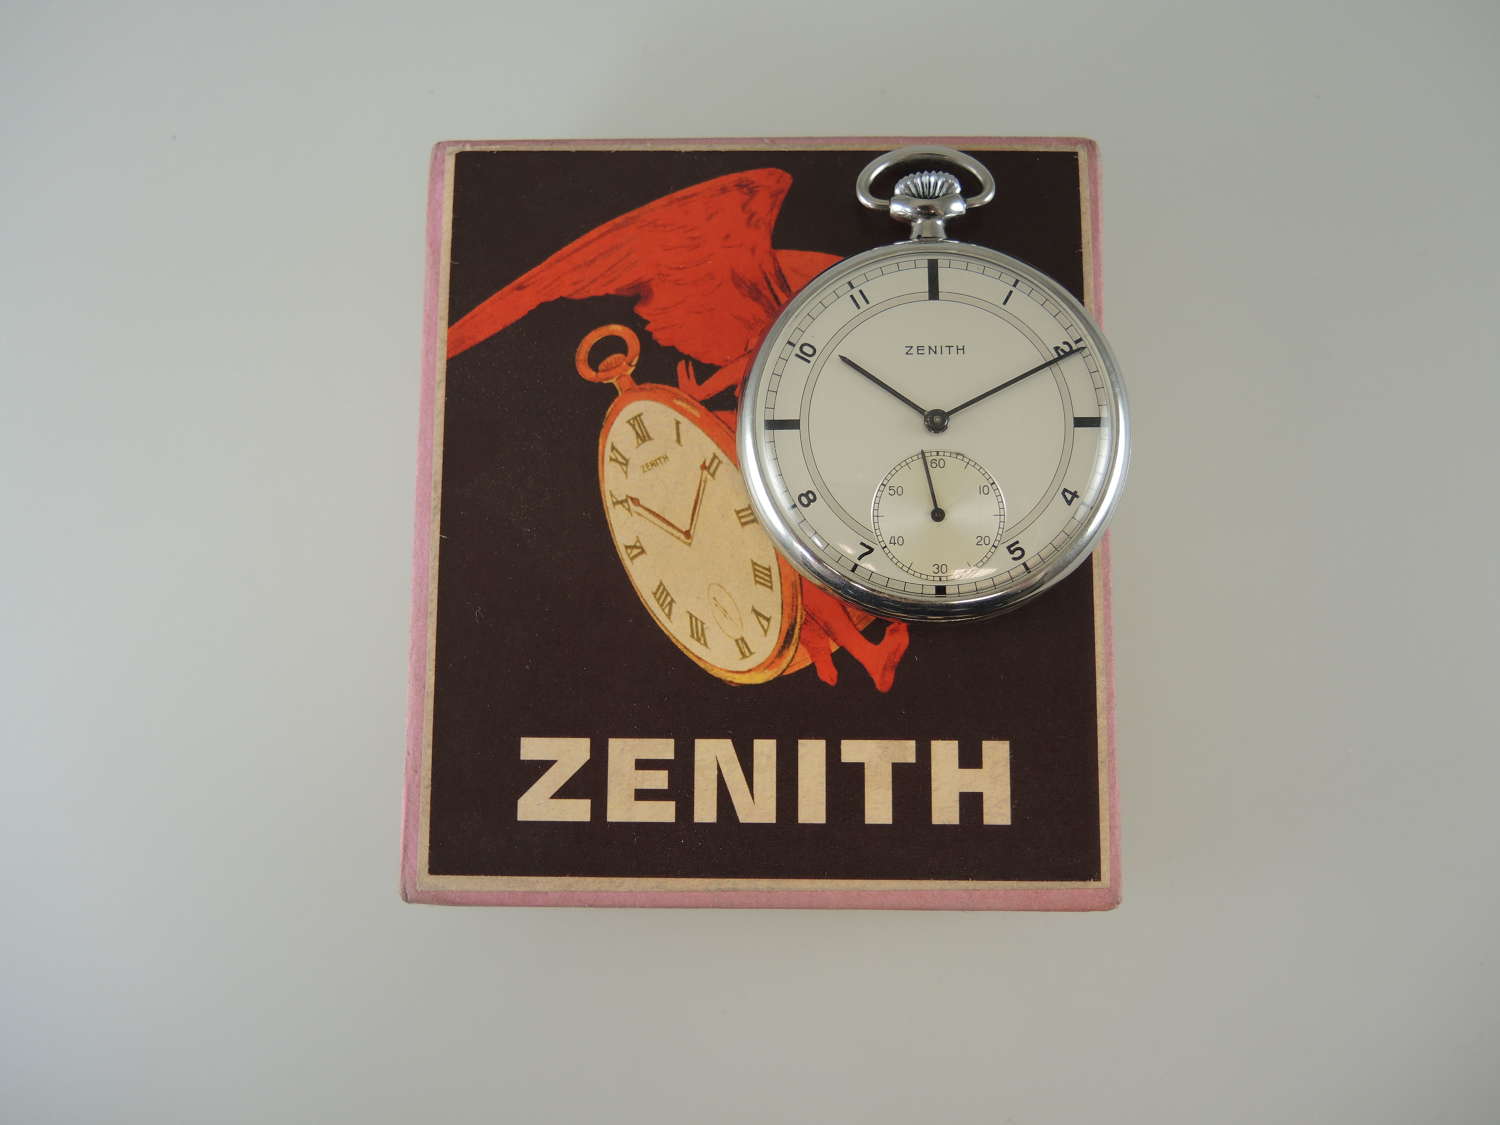 Vintage Zenith pocket watch with box c1930